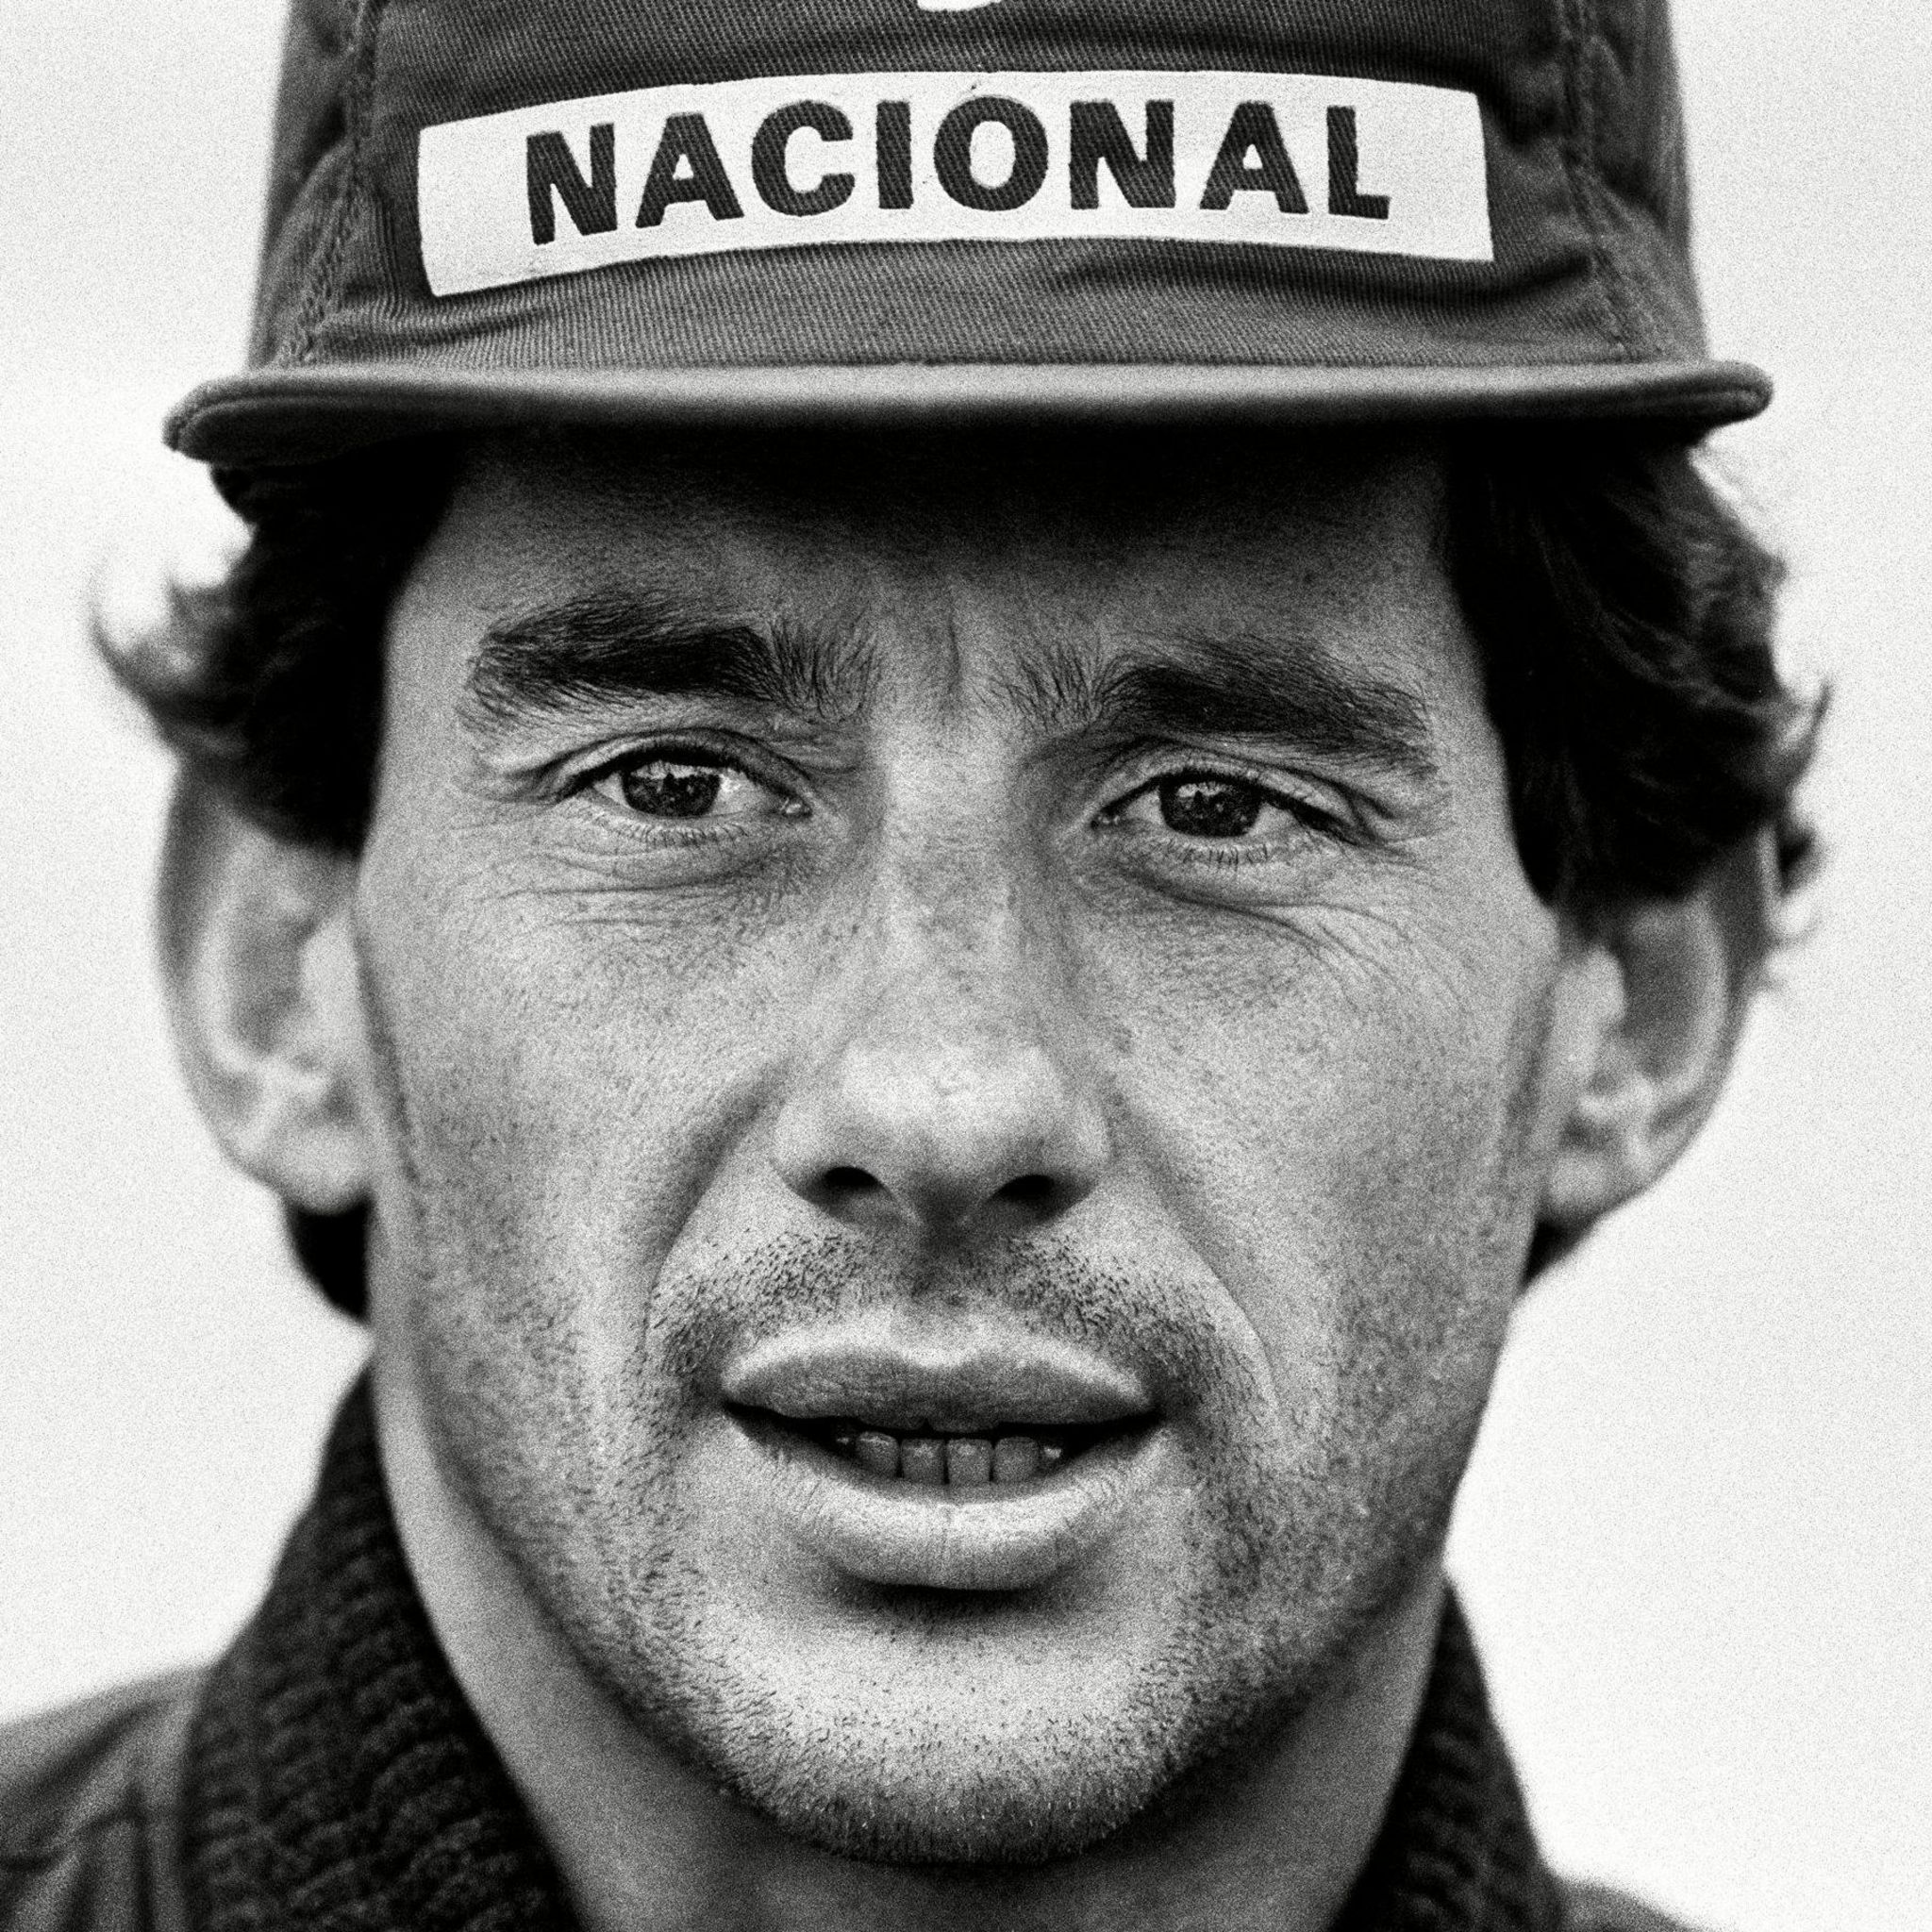 A black and white image of Ayrton Senna